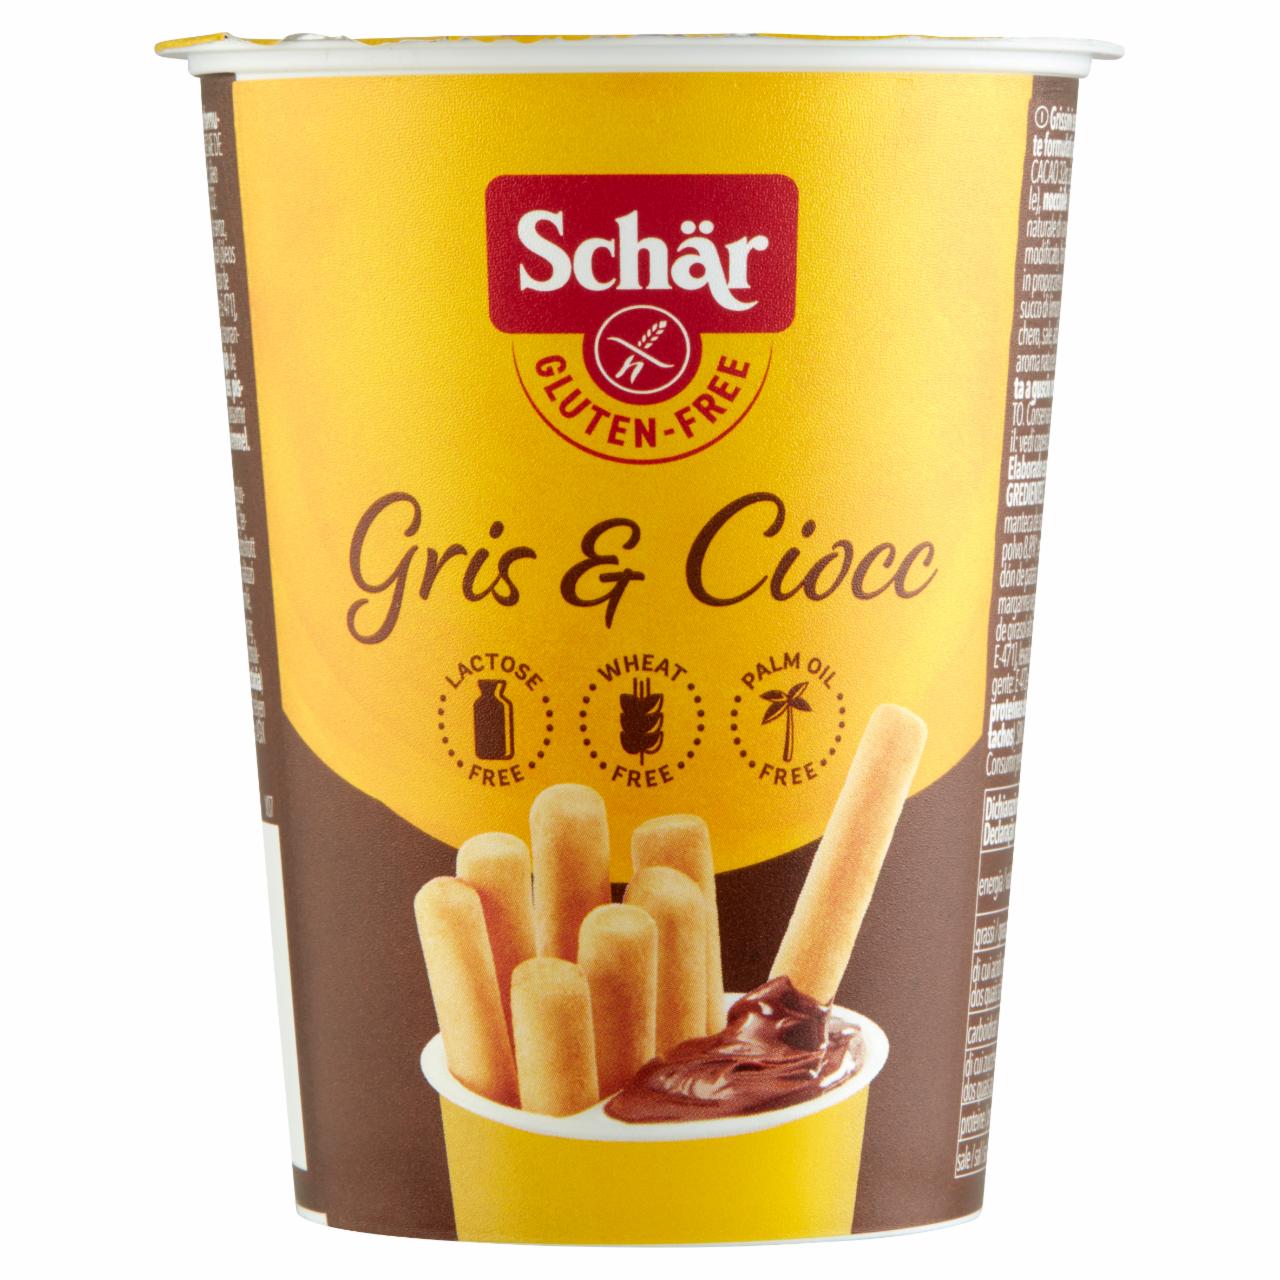 Képek - Schär gluténmentes grissini kakaókrémmel 52 g